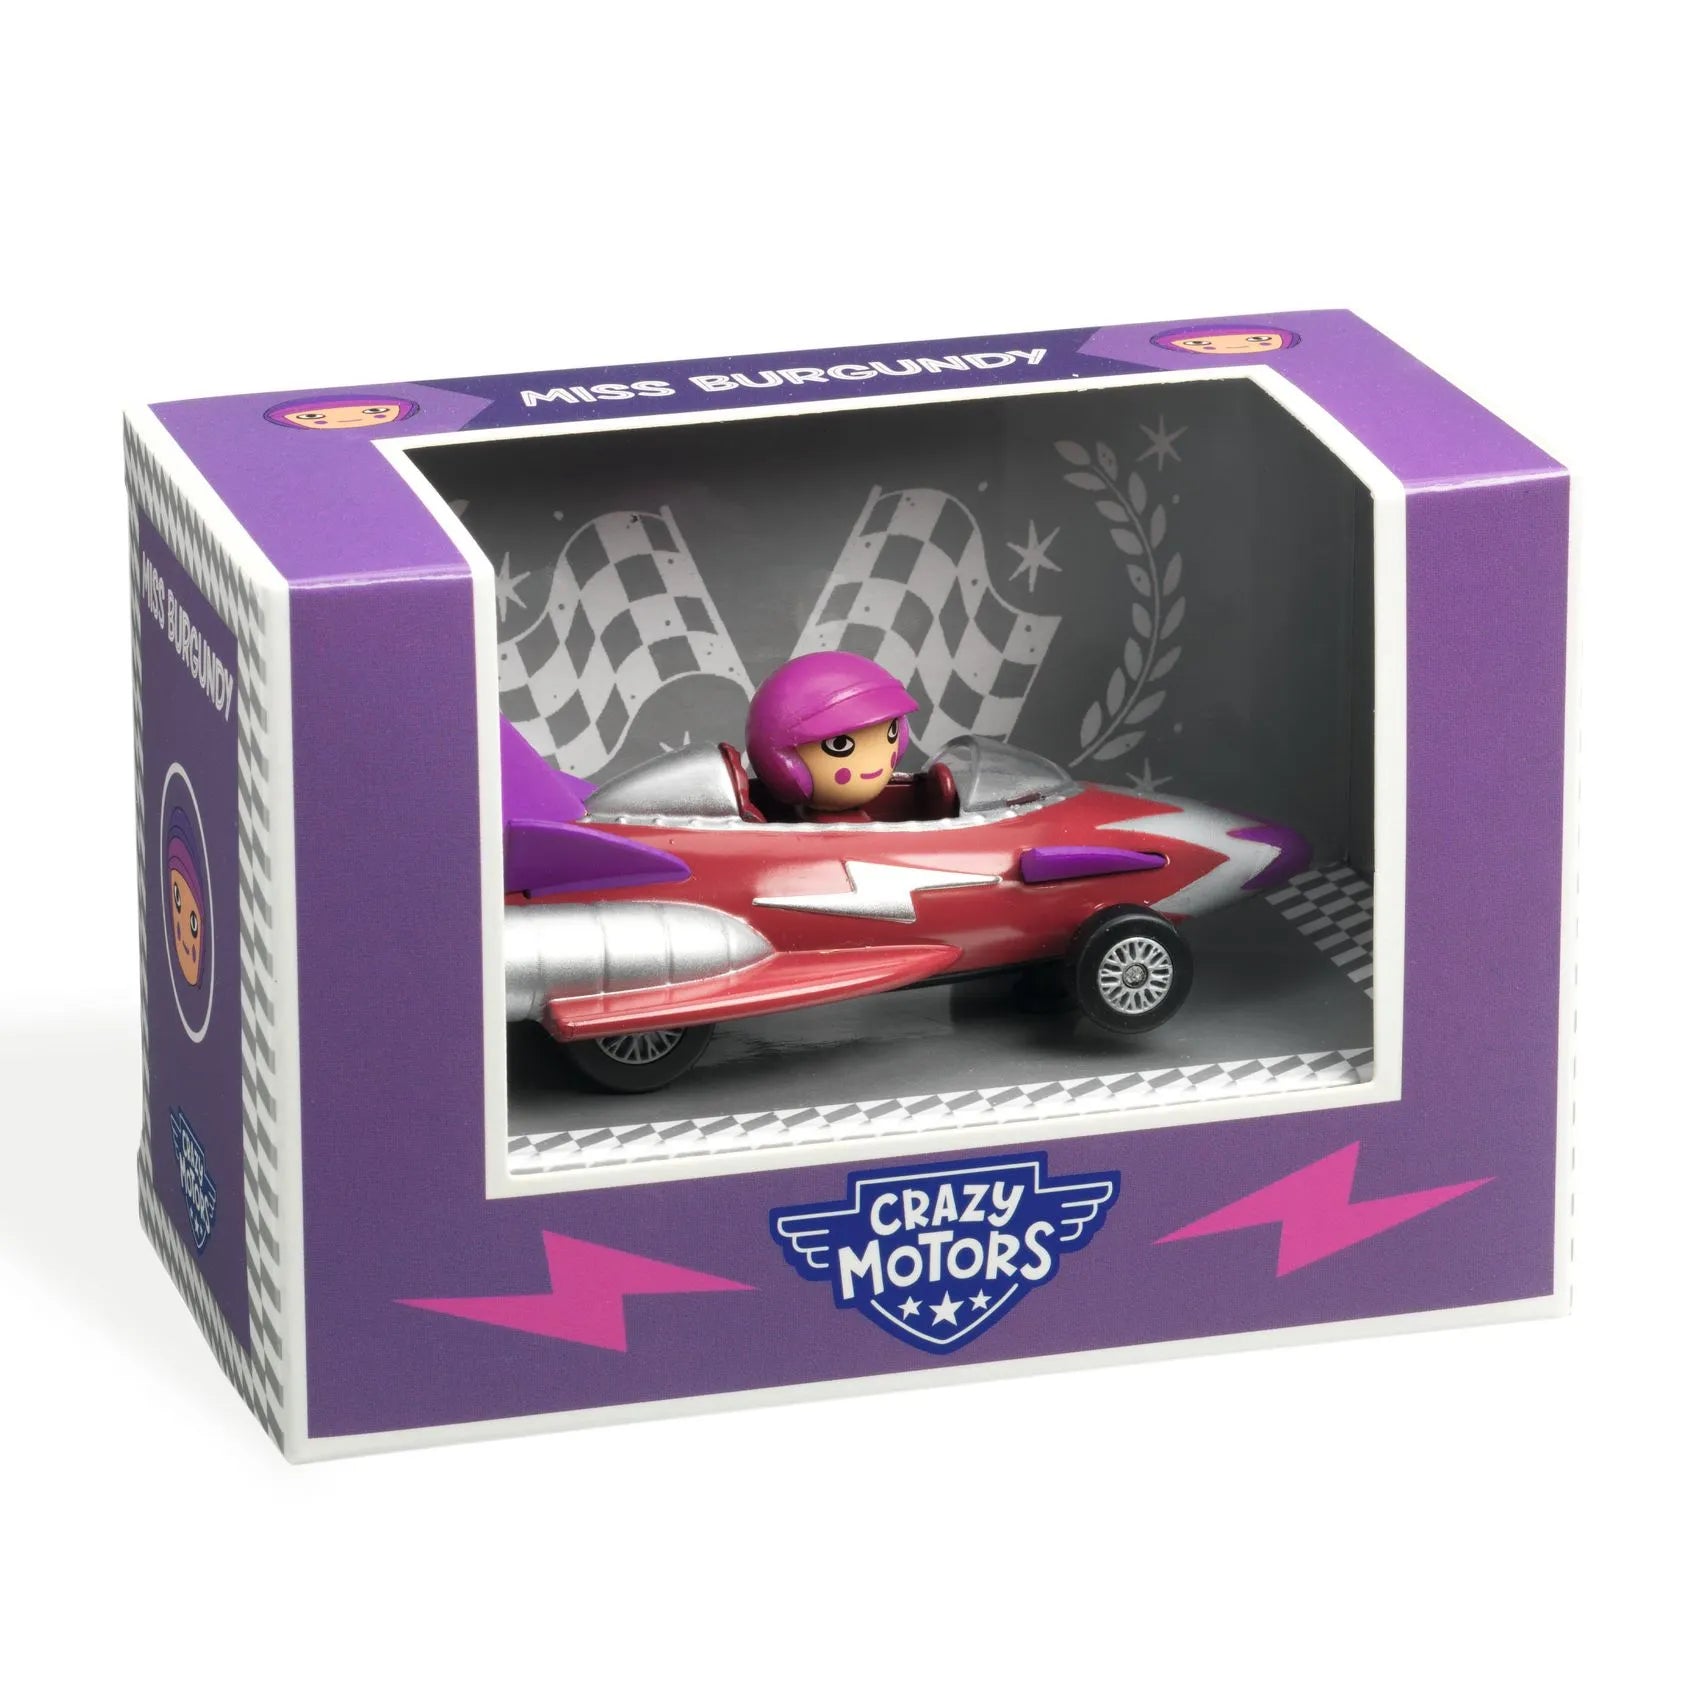 Djeco Crazy Motors Toy Car For Kids – Miss Burgundy